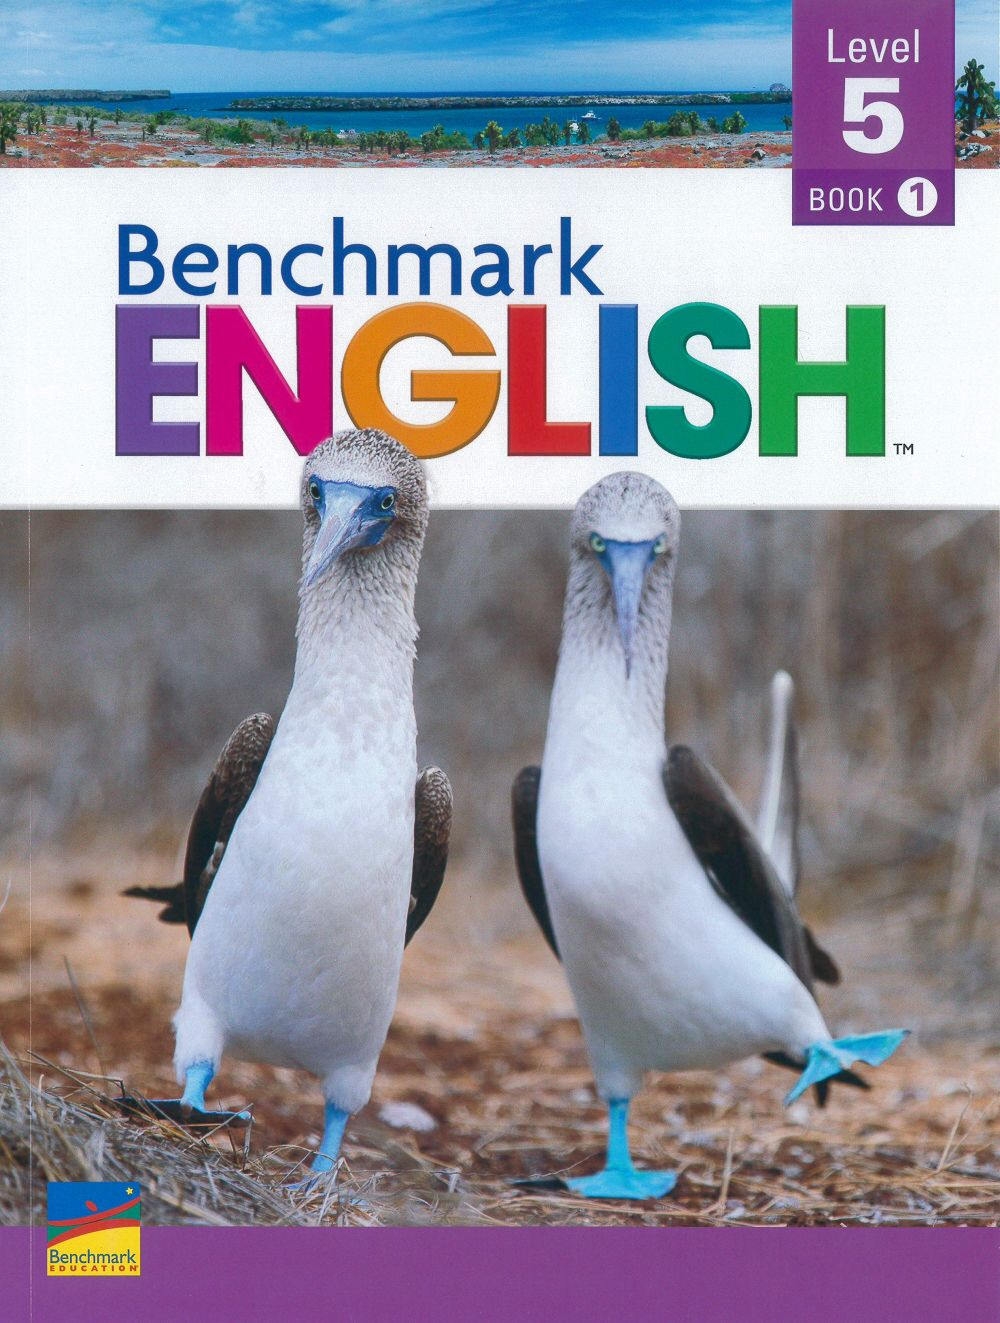 Benchmark English (5) Module 1 Student Book